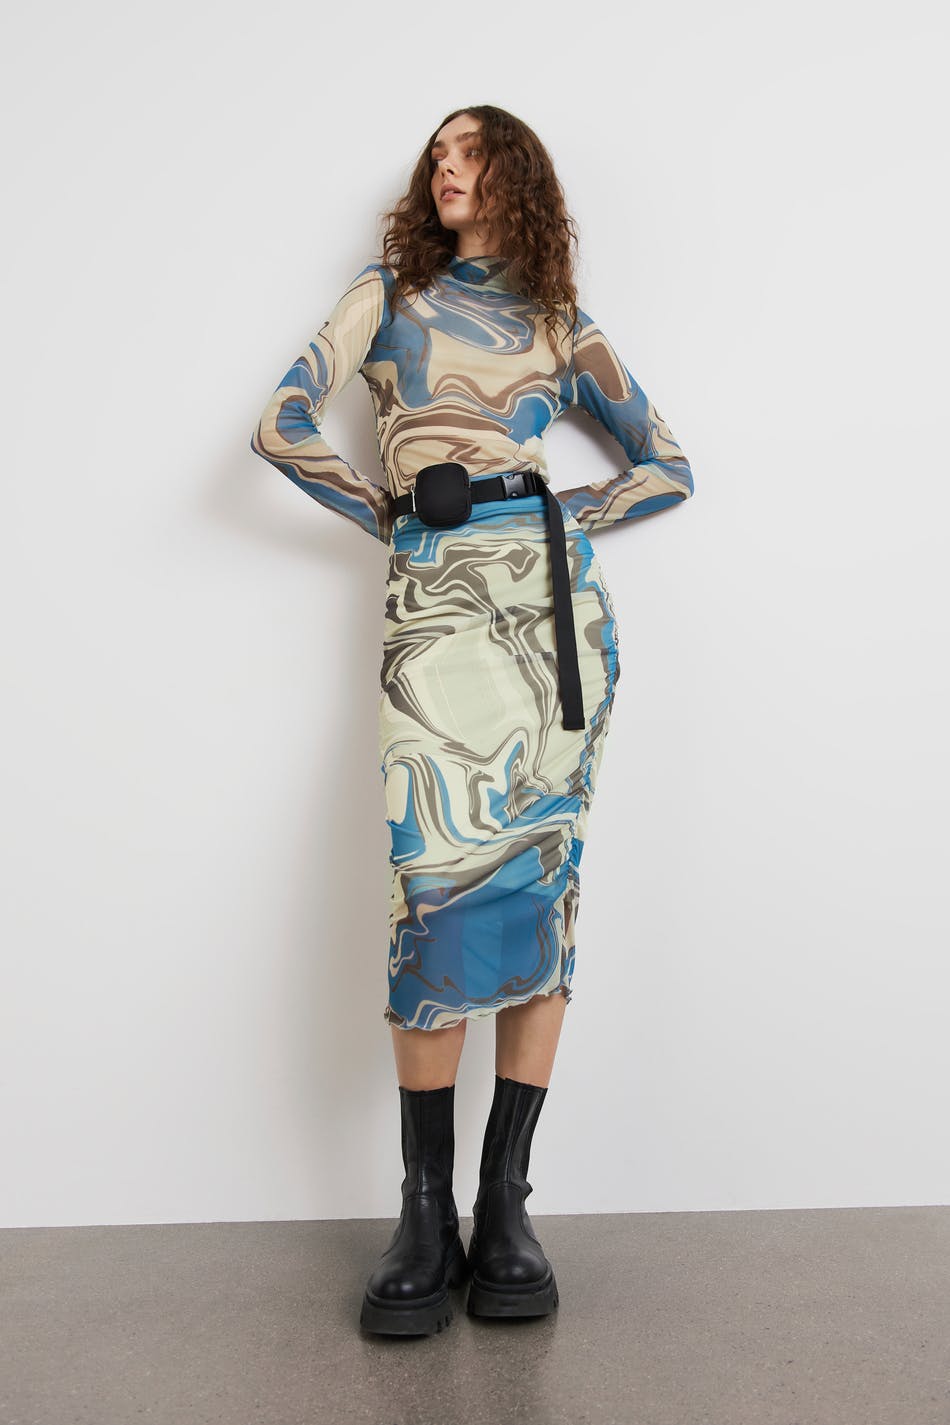 Malin mesh skirt, Gina Tricot